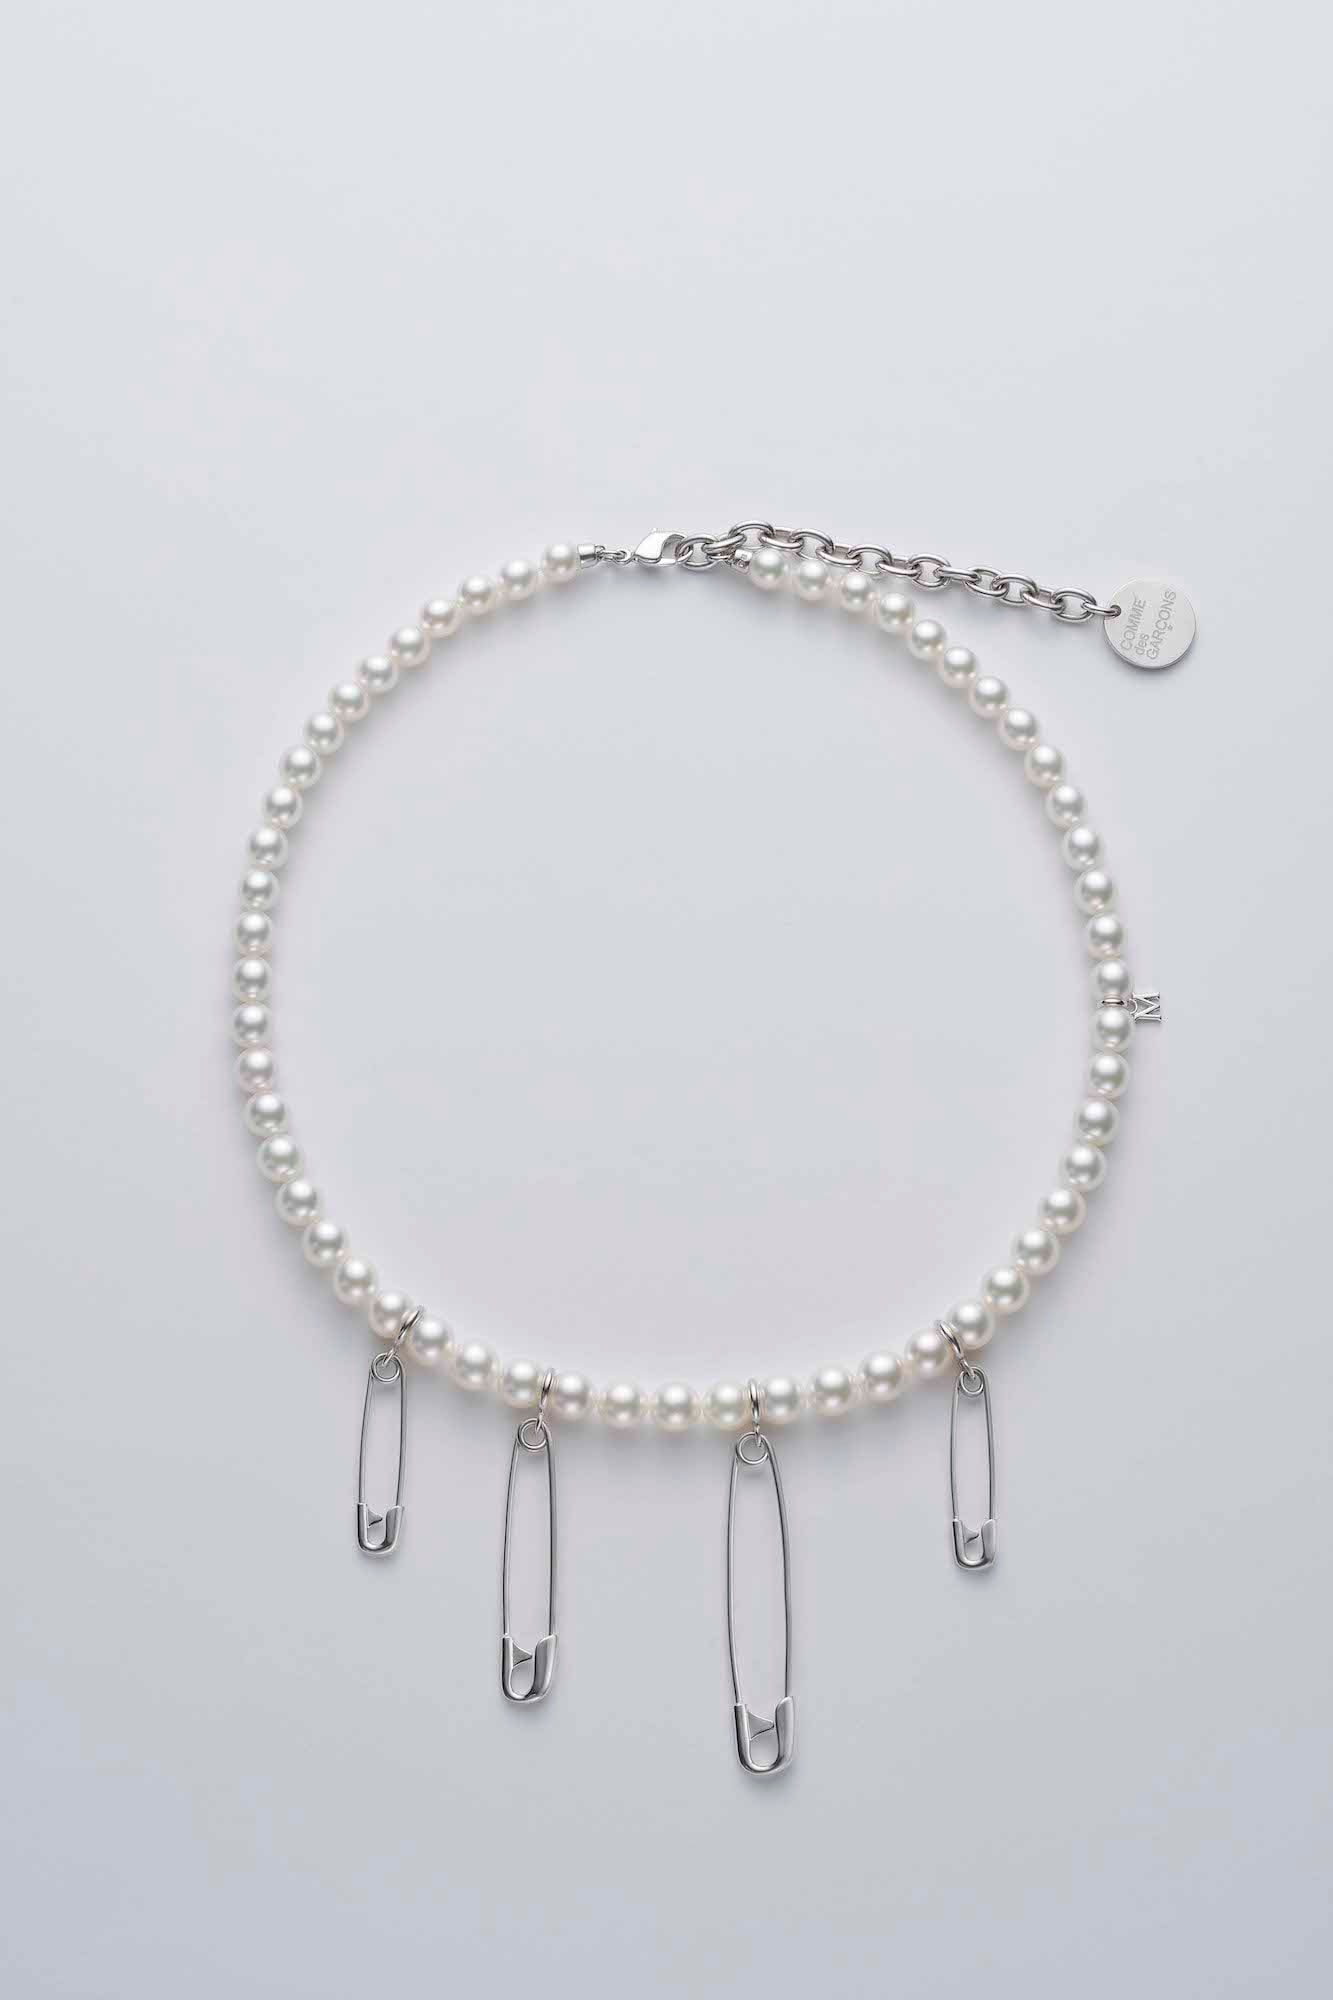 COMME des GARÇONS x Mikimoto Fine Jewelry Collaboration Rei Kawakubo Pearl Silver Necklace Where to Buy